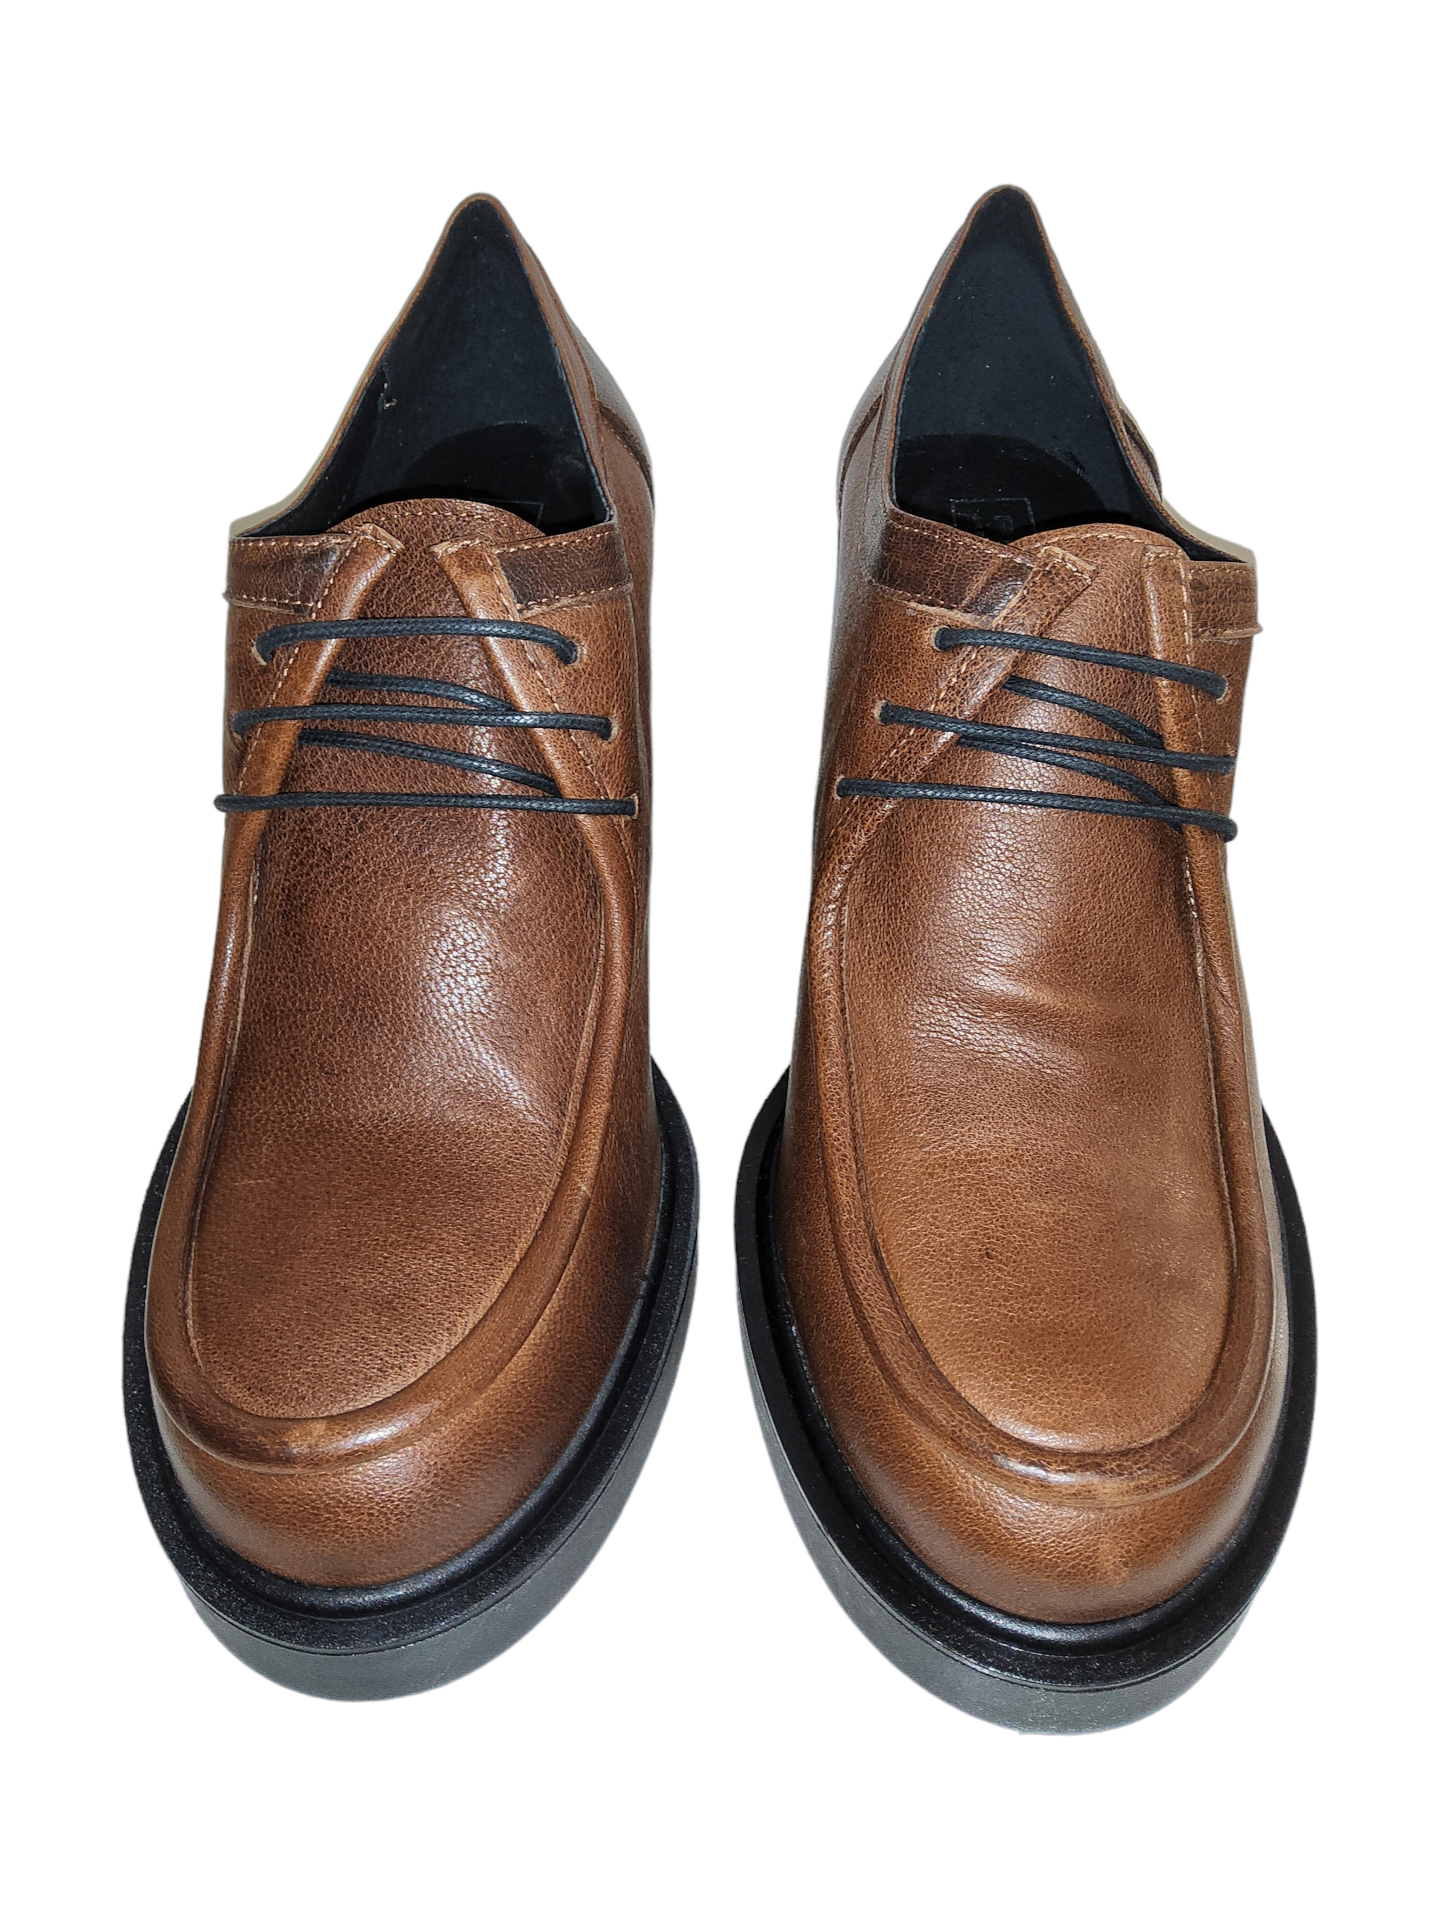 Tan leather platform shoe